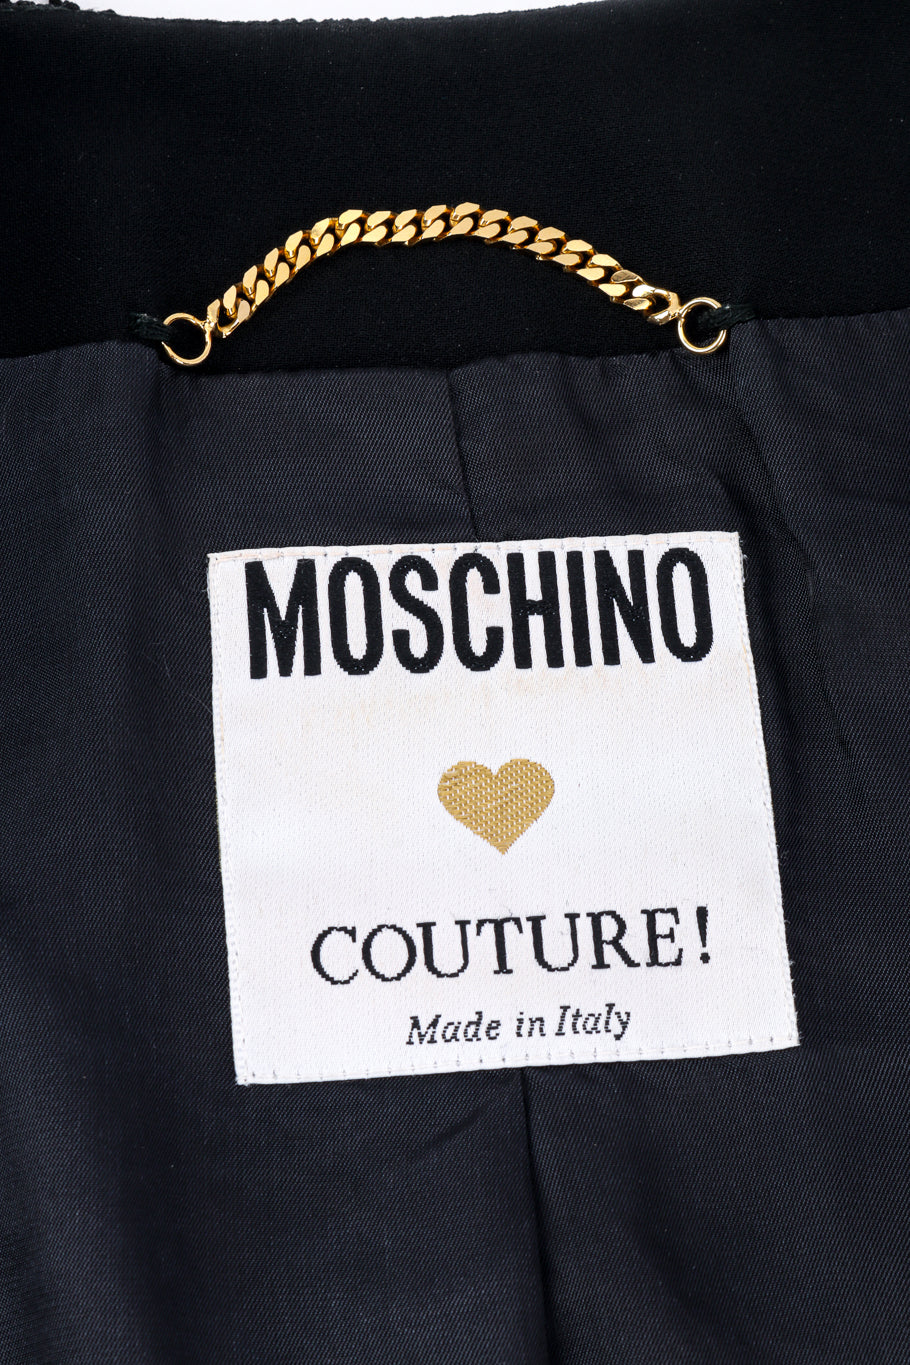 Vintage Moschino Couture Fringe Jacket and Skirt Set jacket signature label closeup @recessla